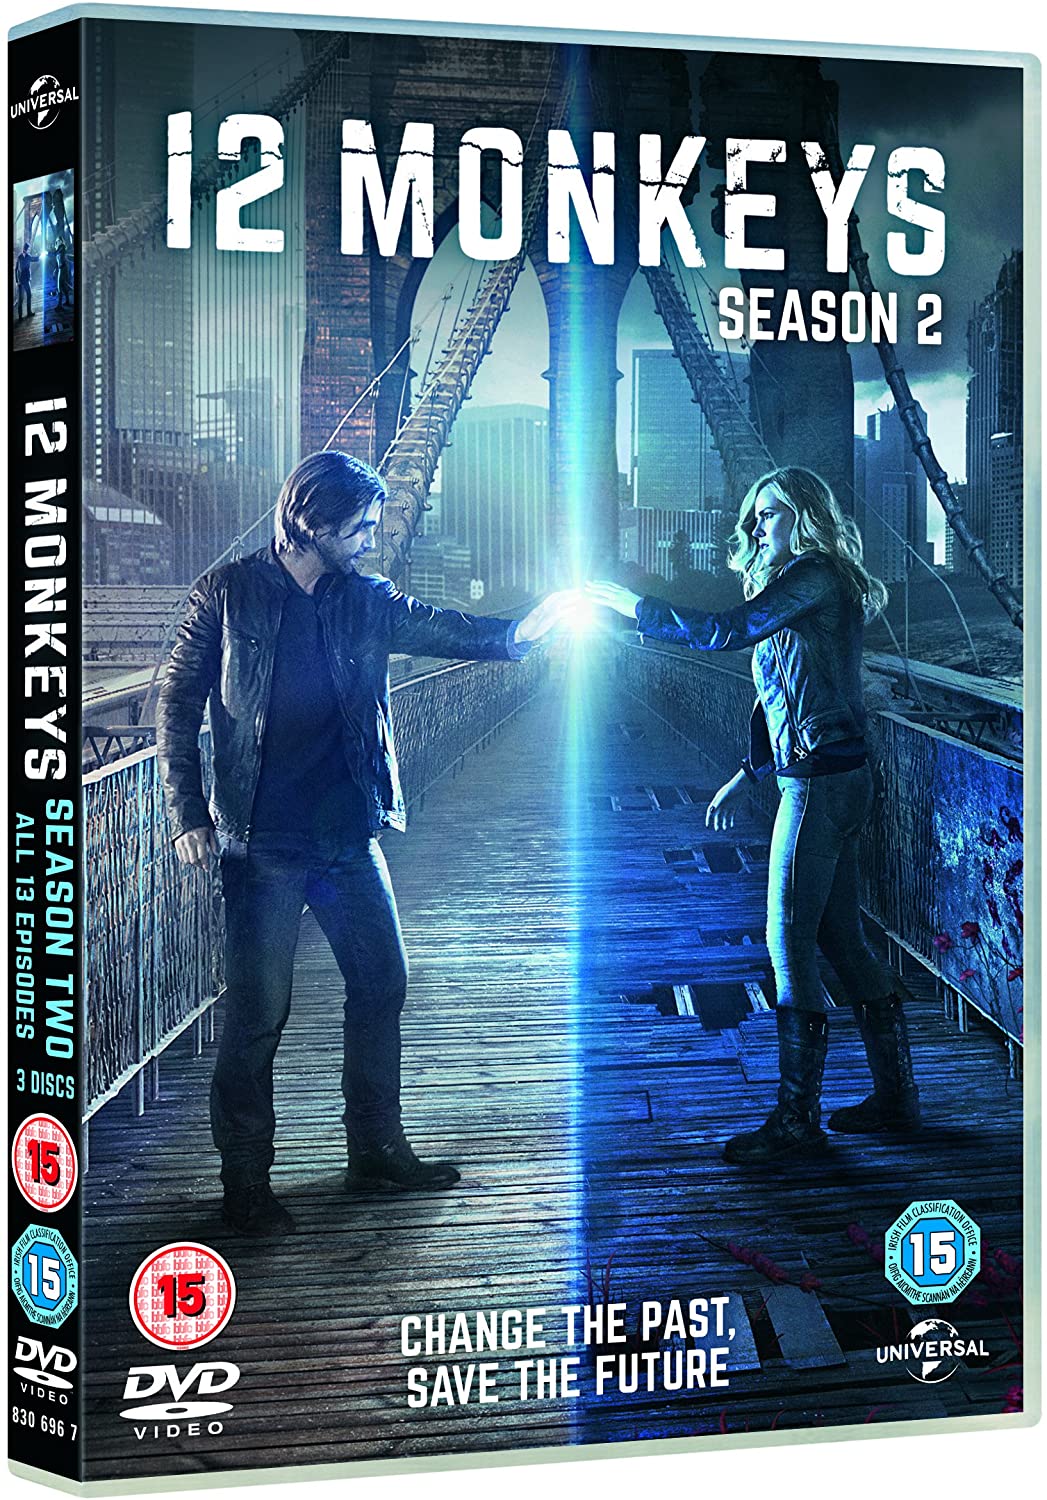 12 Monkeys: Season 2 (DVD)